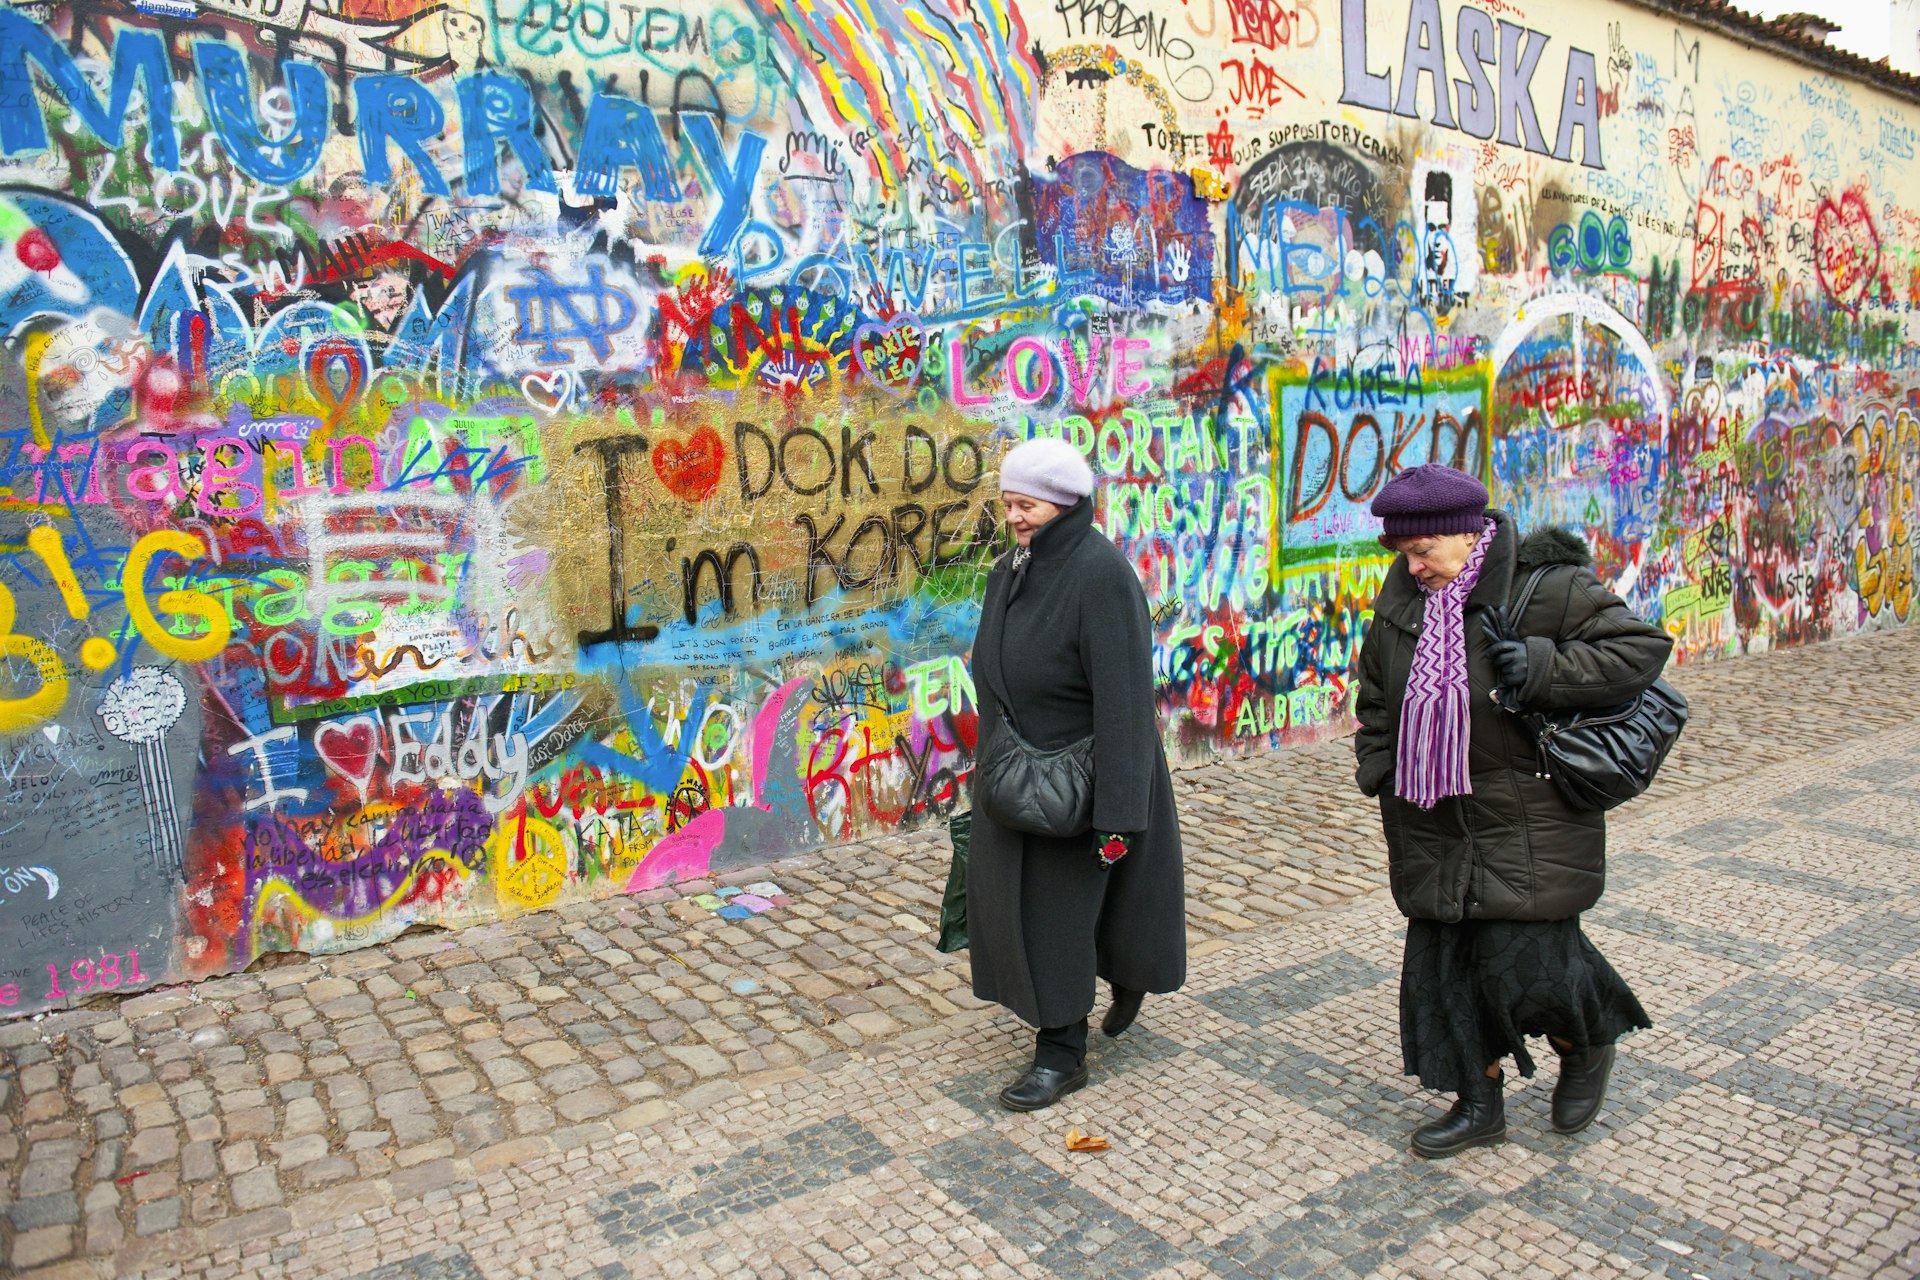 Two people walk along a graffiti-lined cobbled street